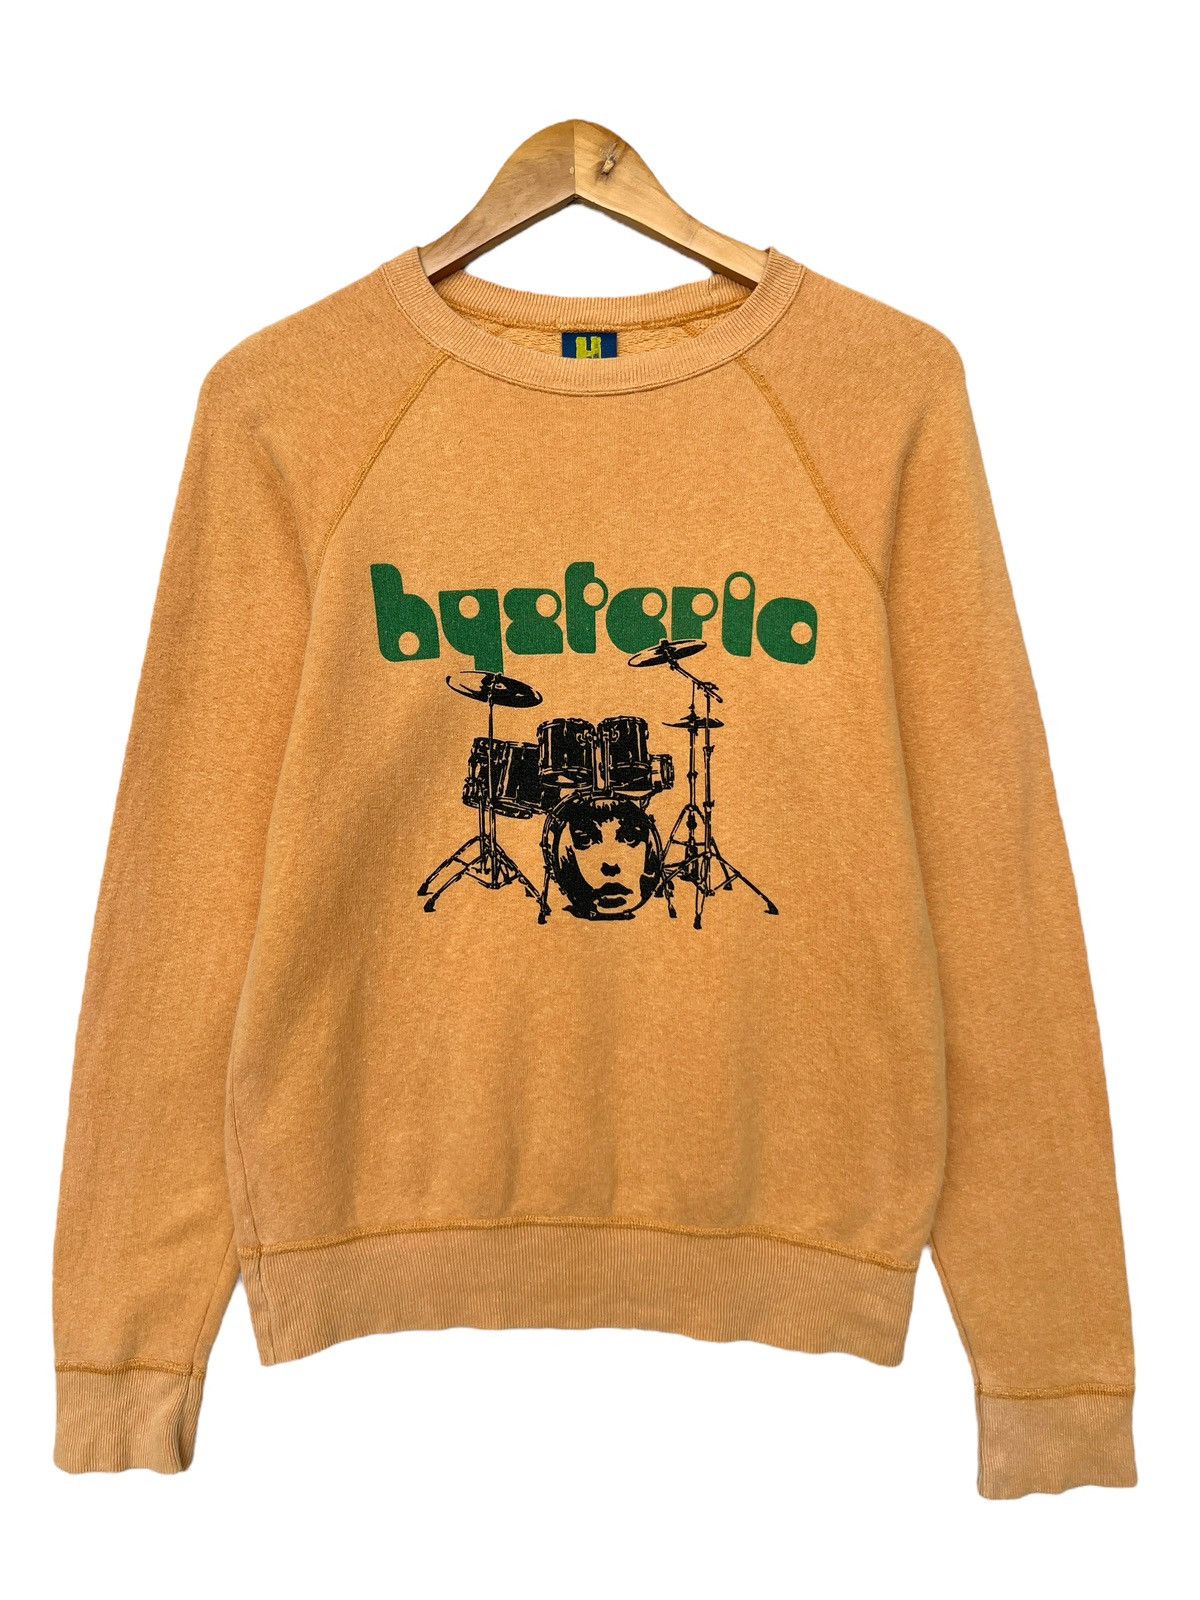 Vintage Hysteric Glamour Drum Sweatshirt size S - 1